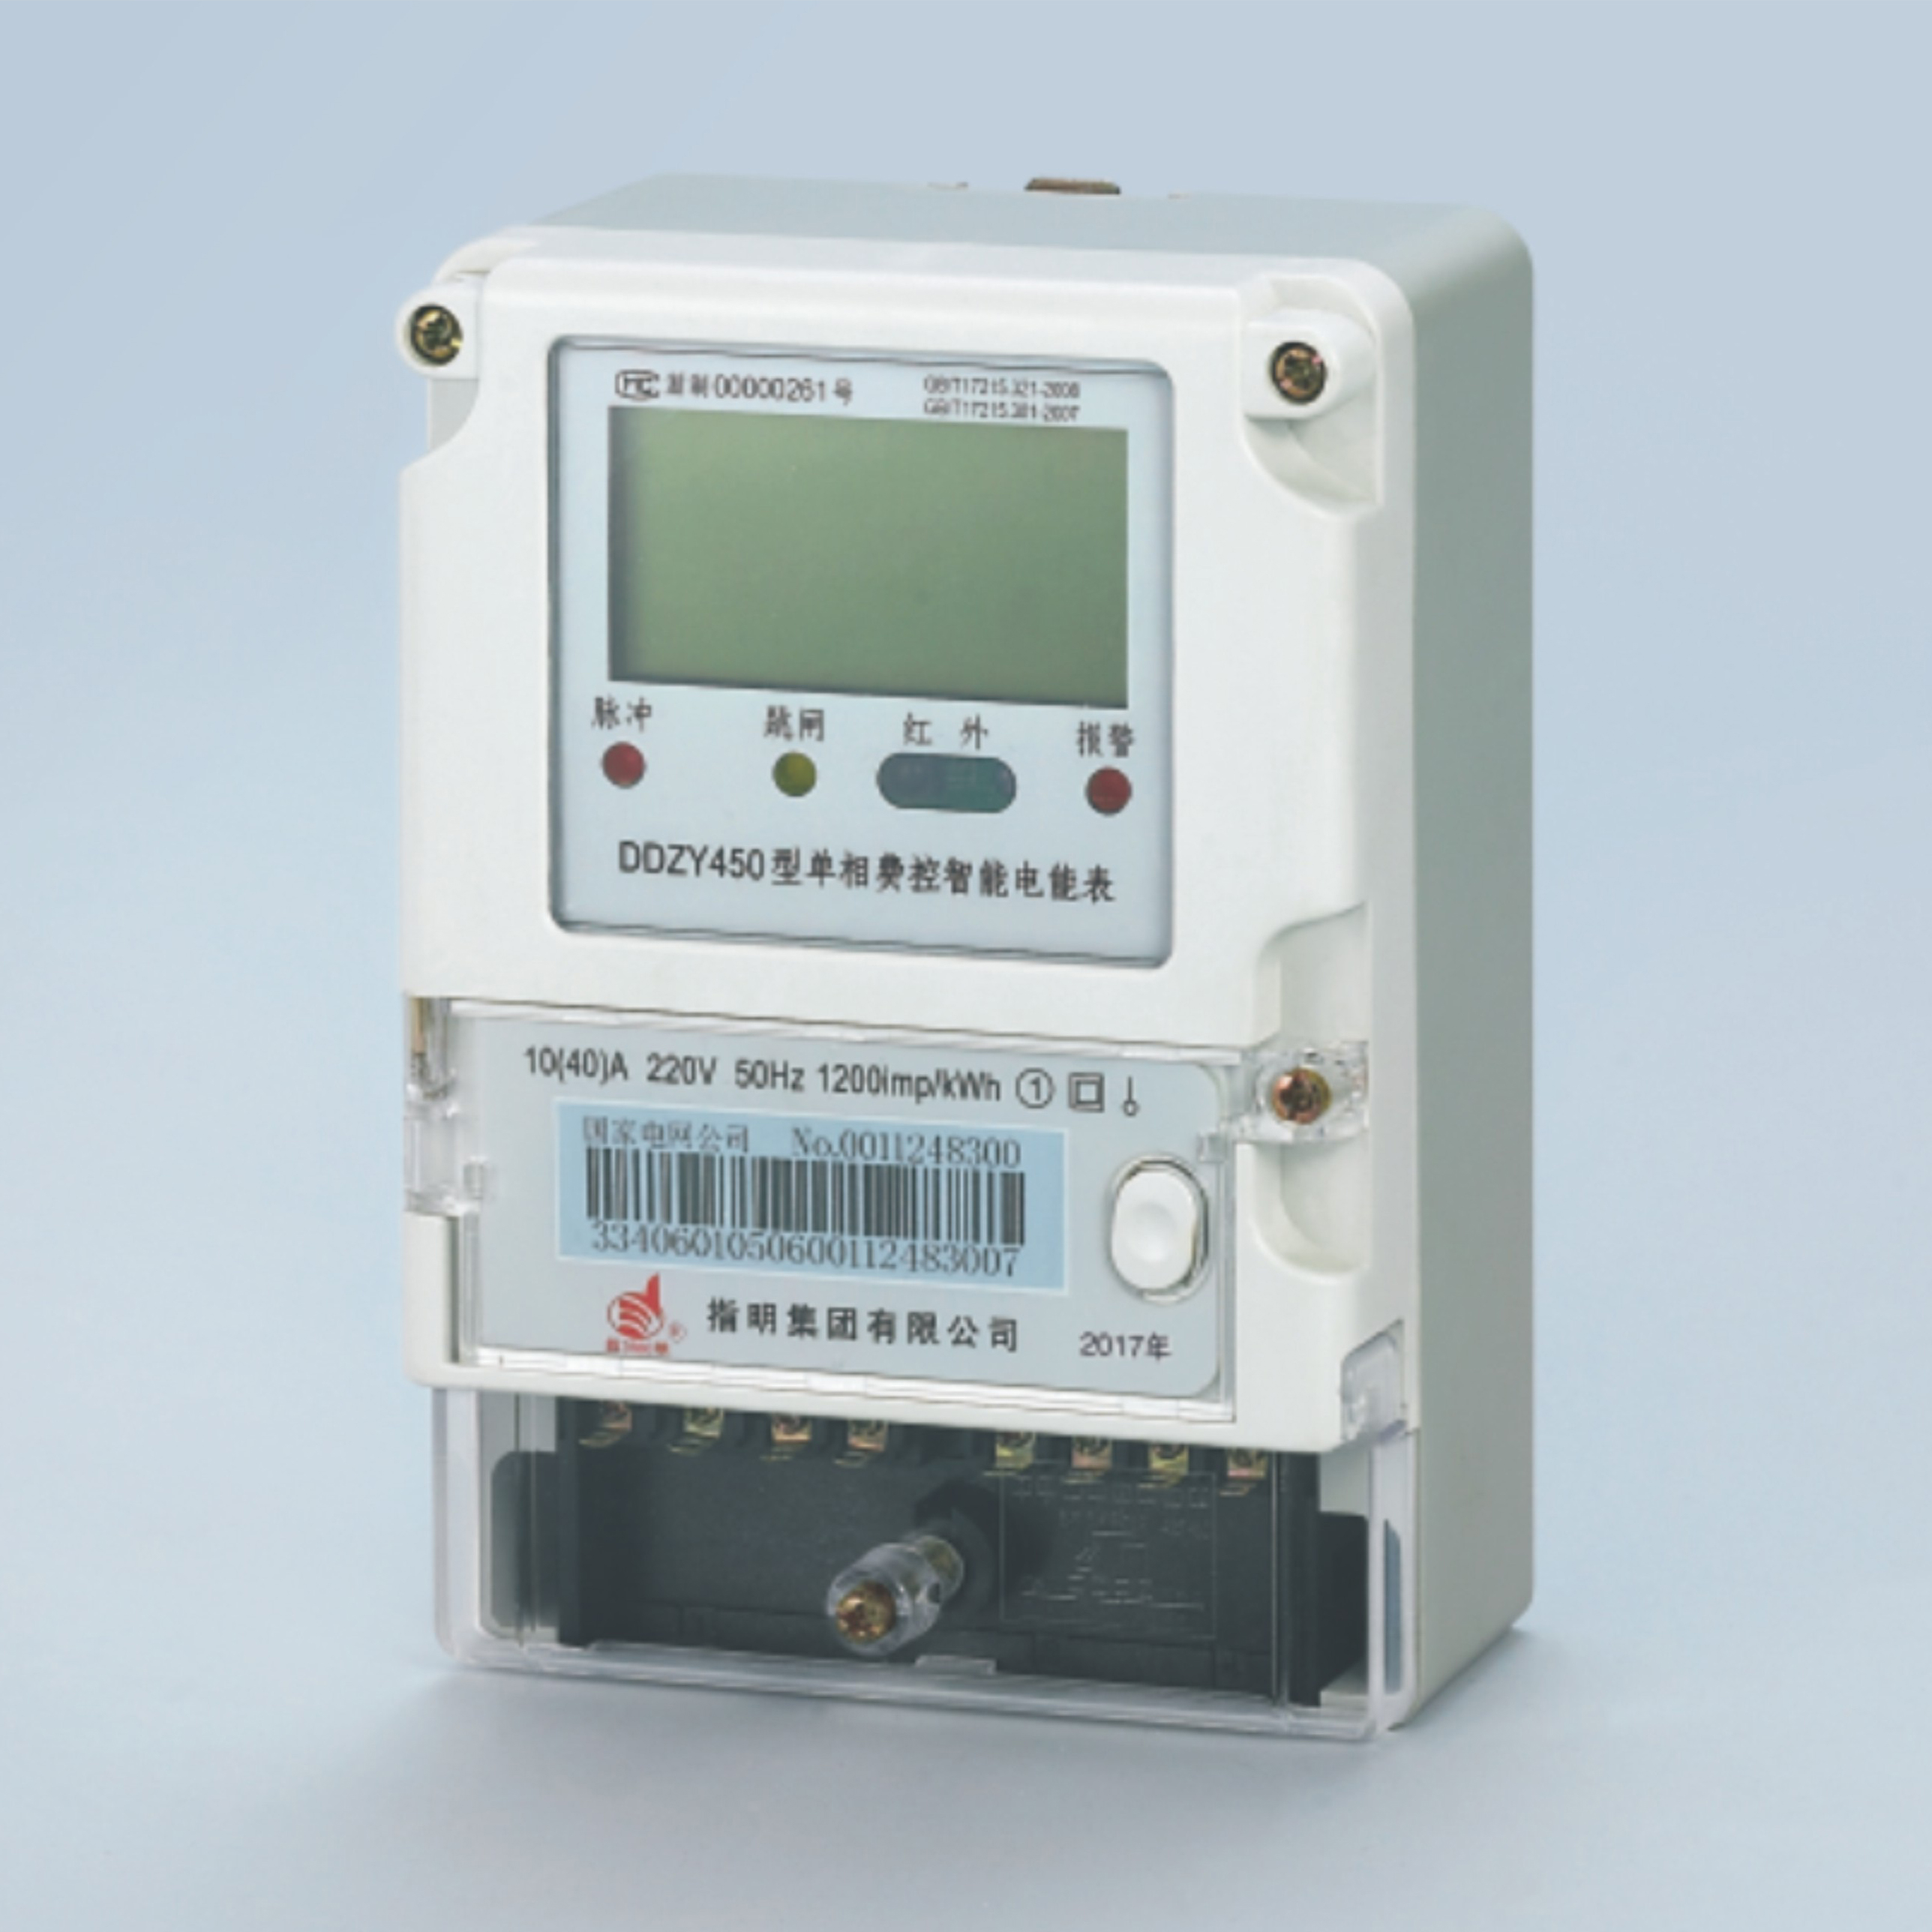 DDZY450  Single phase tariff controlled intelligent energy meter 